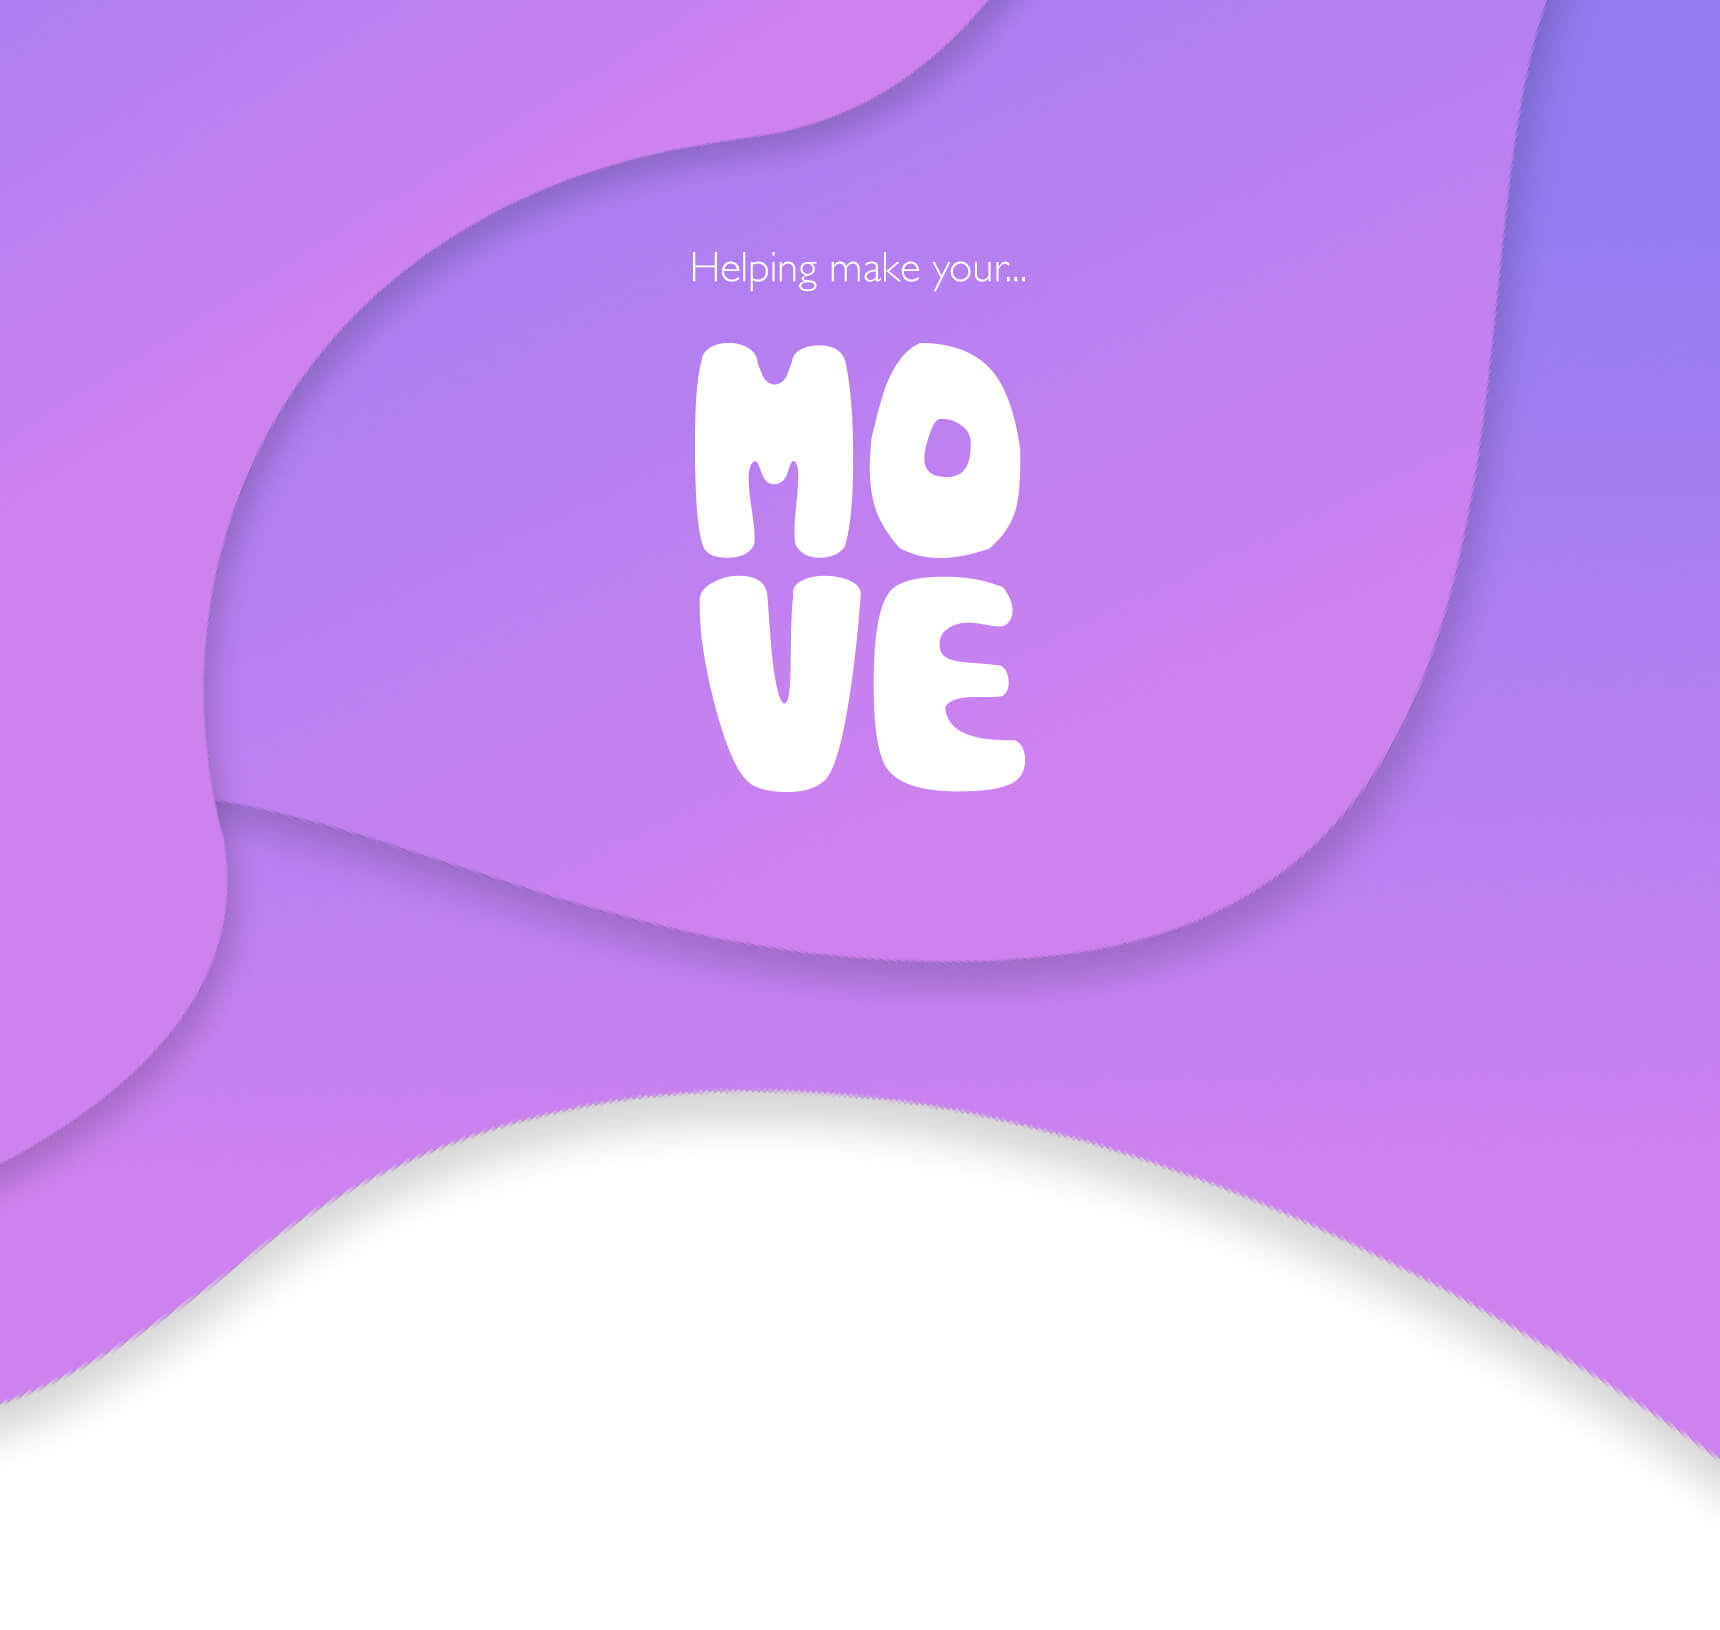 move logo